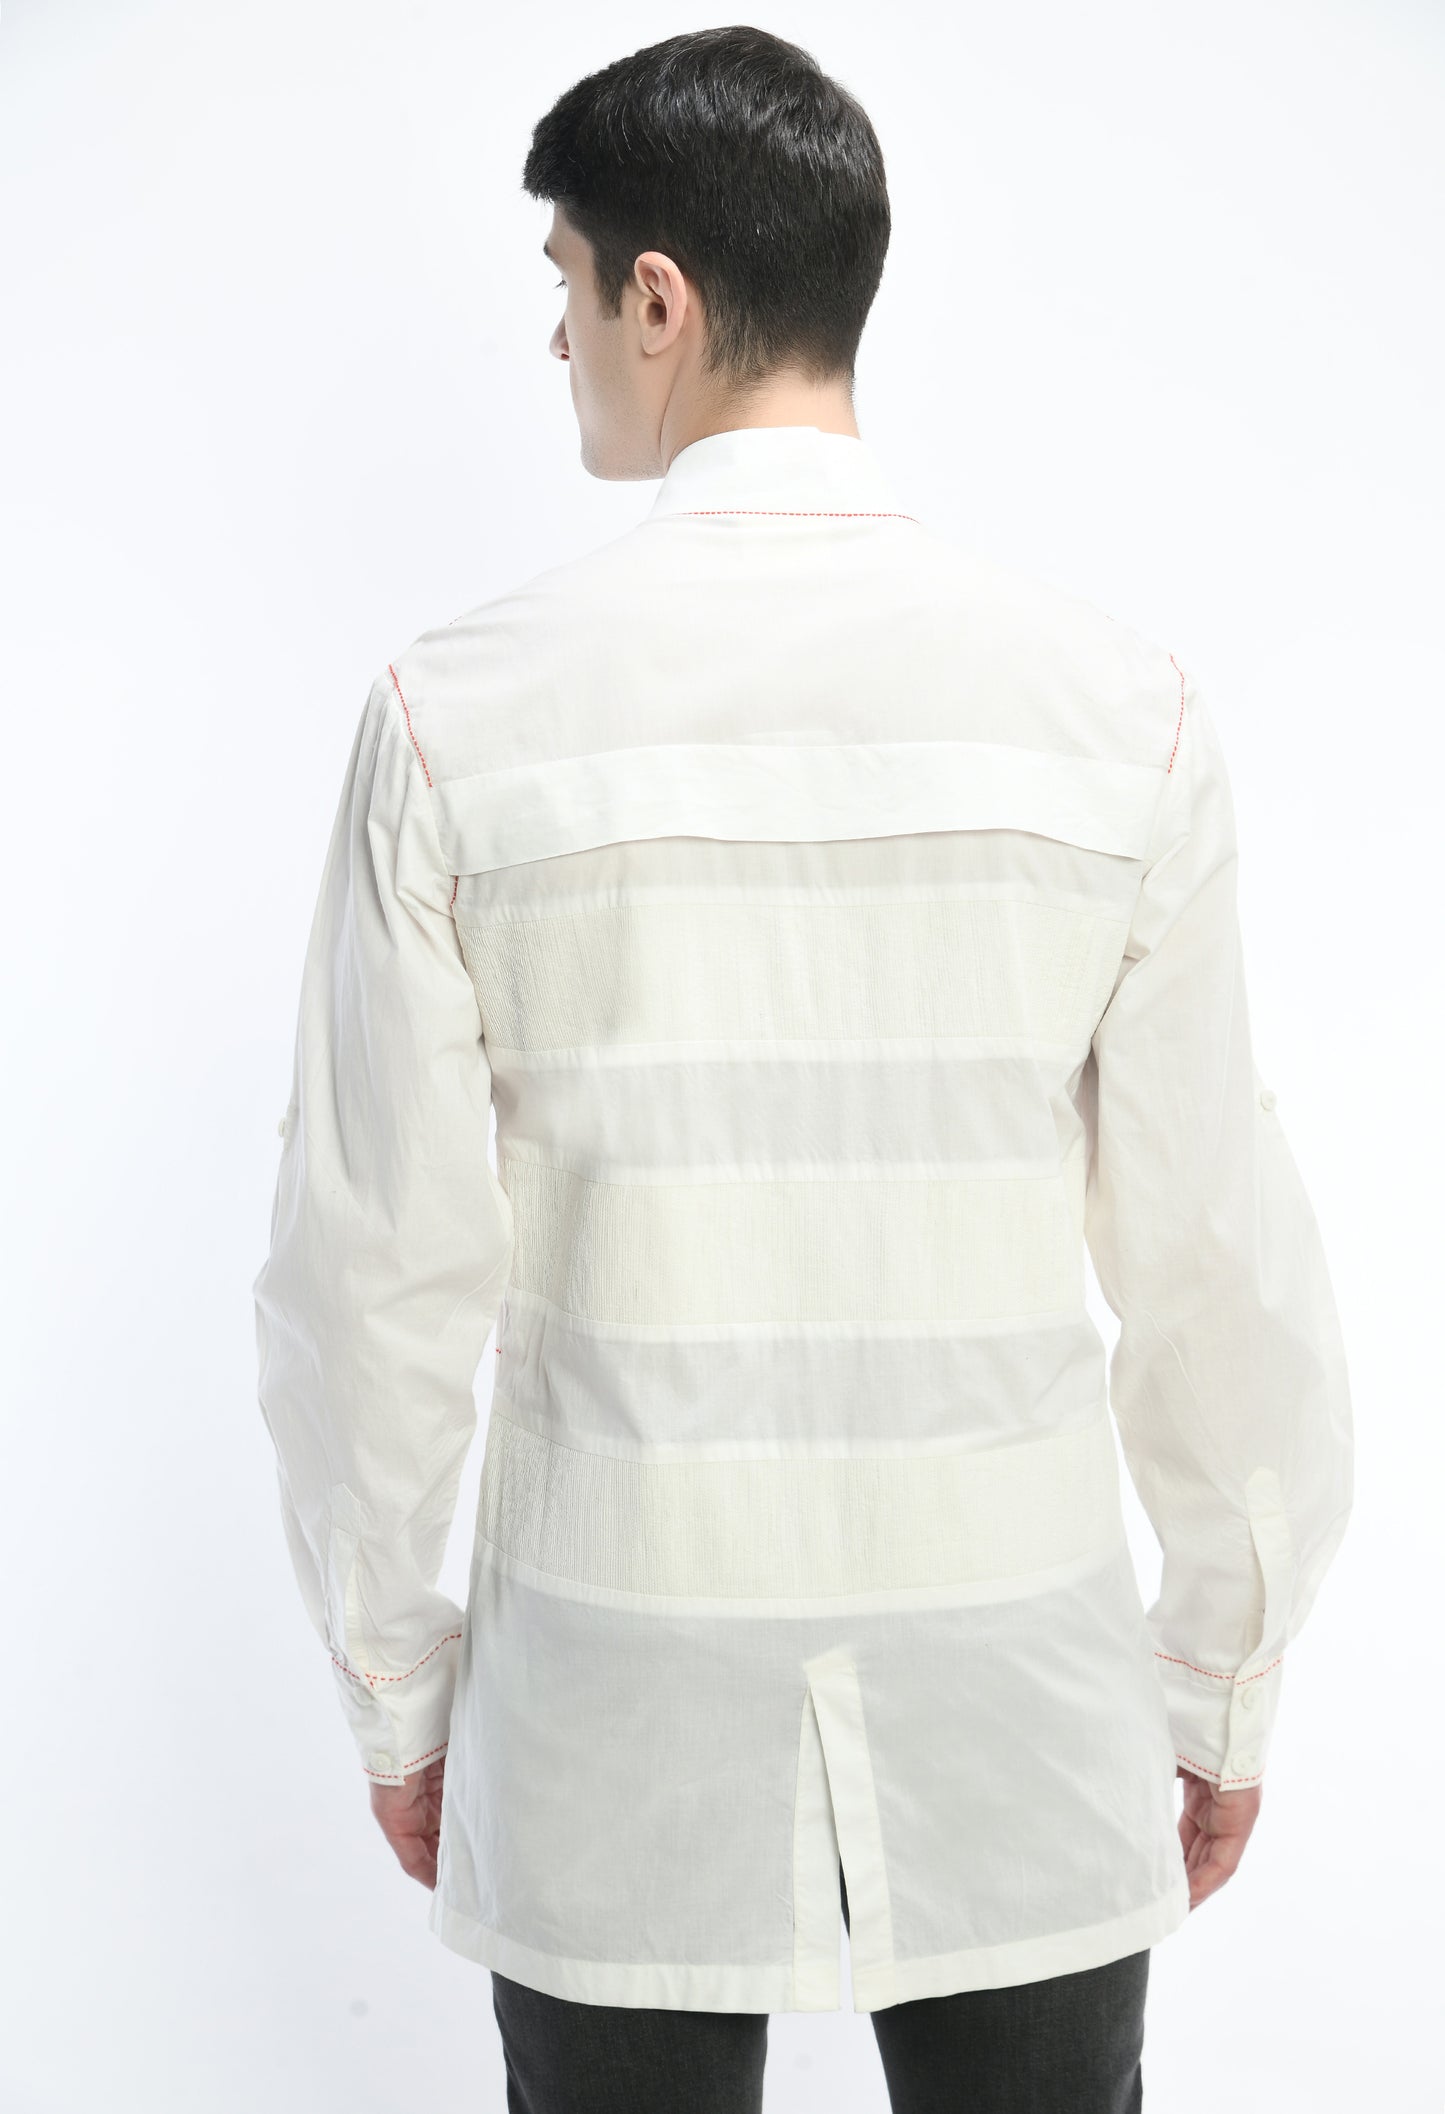 A white cotton shirt with Kantha thread work